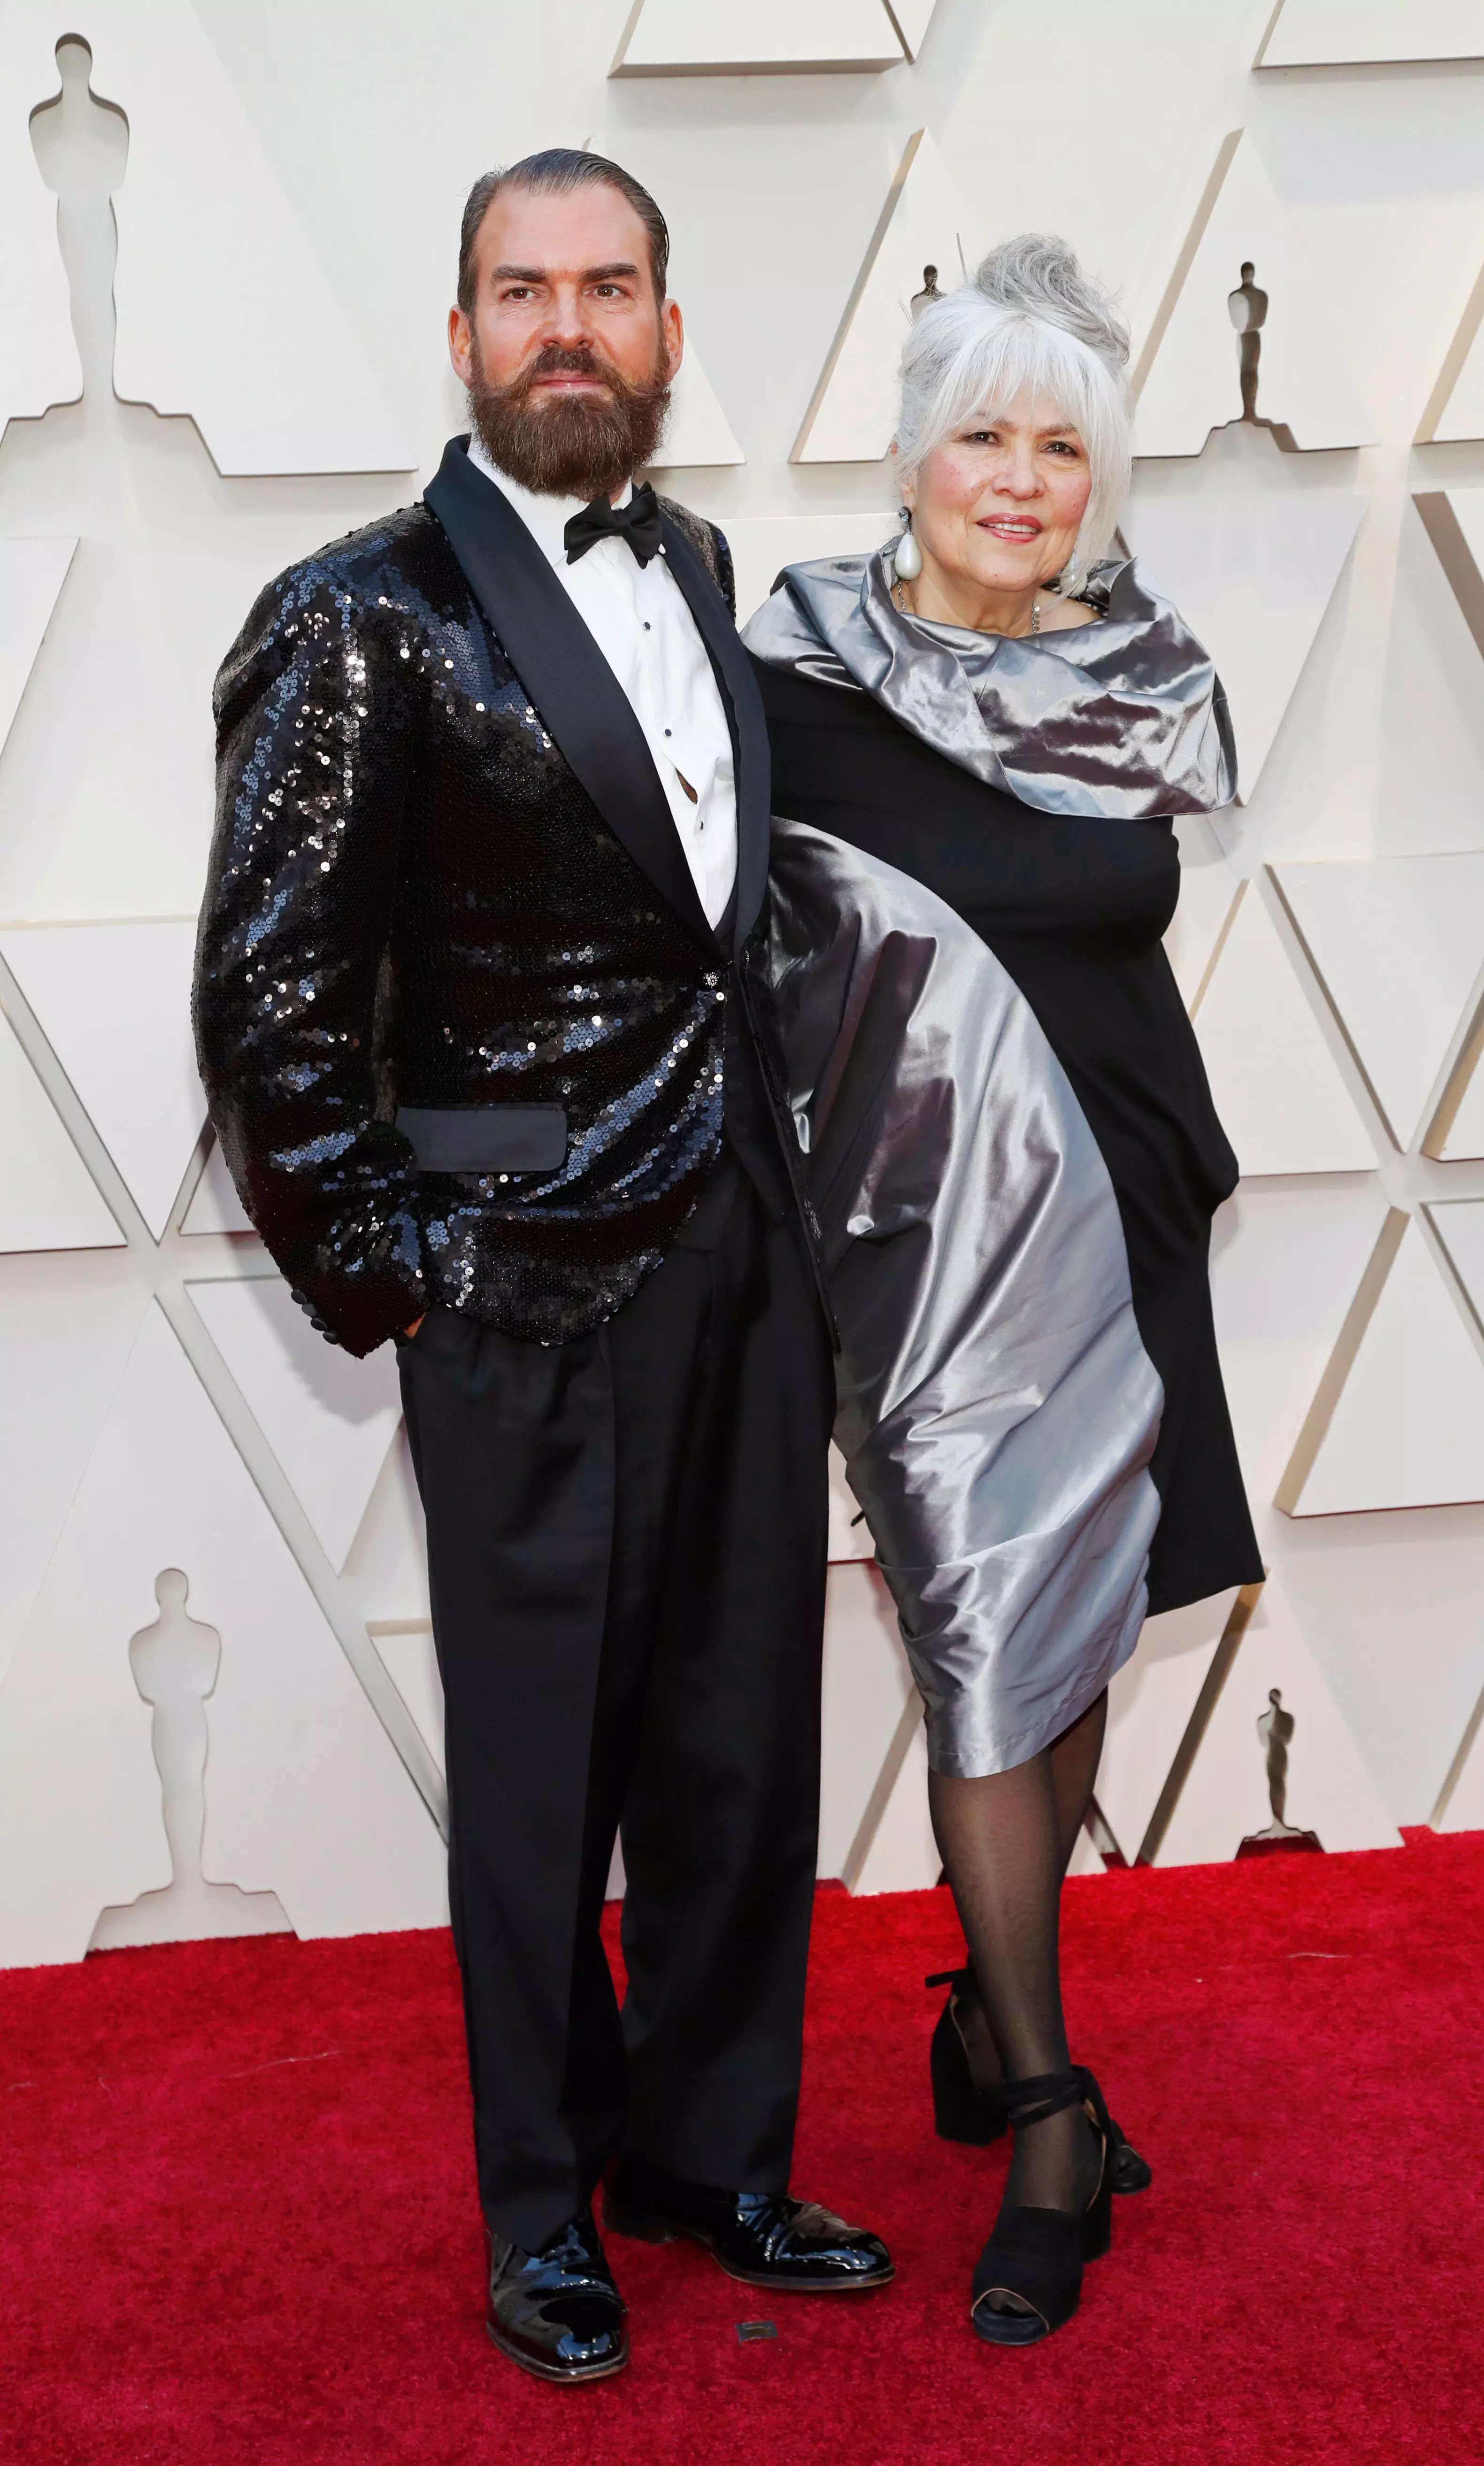 Marc Pilcher attends the 91st Academy Awards alongside fellow make-up artist Jenny Shircore (